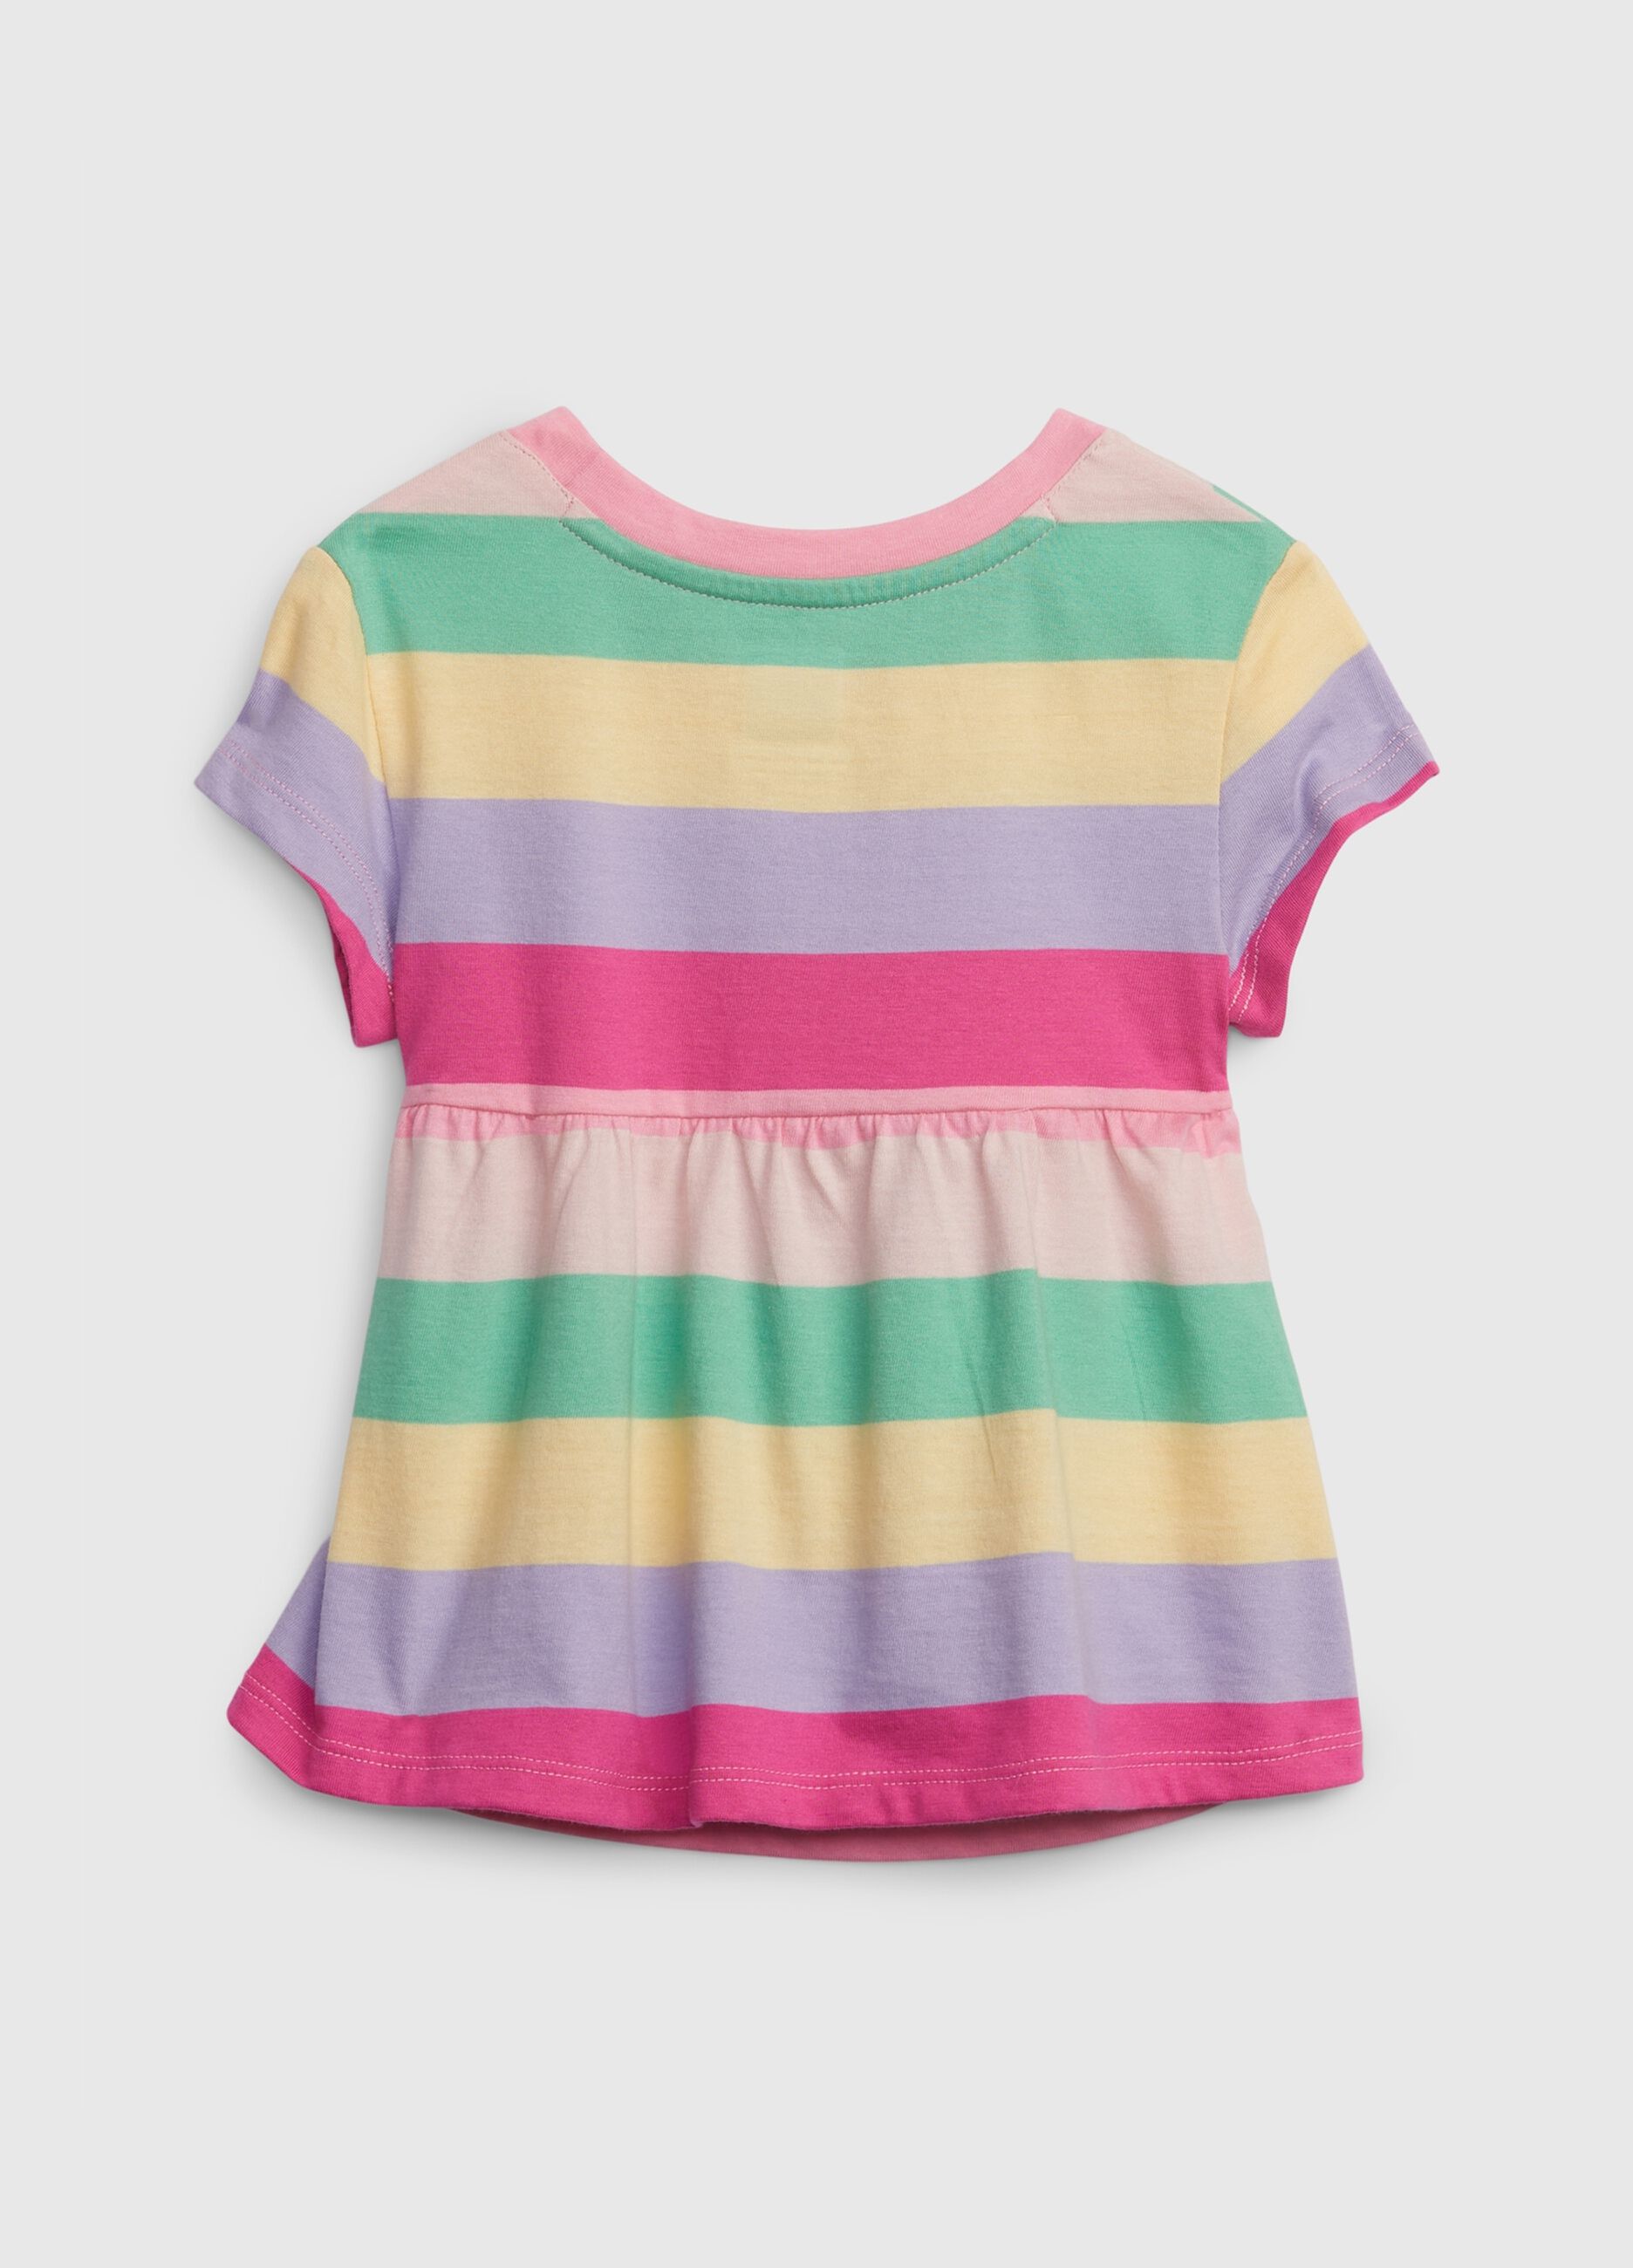 Organic cotton T-shirt with striped pattern